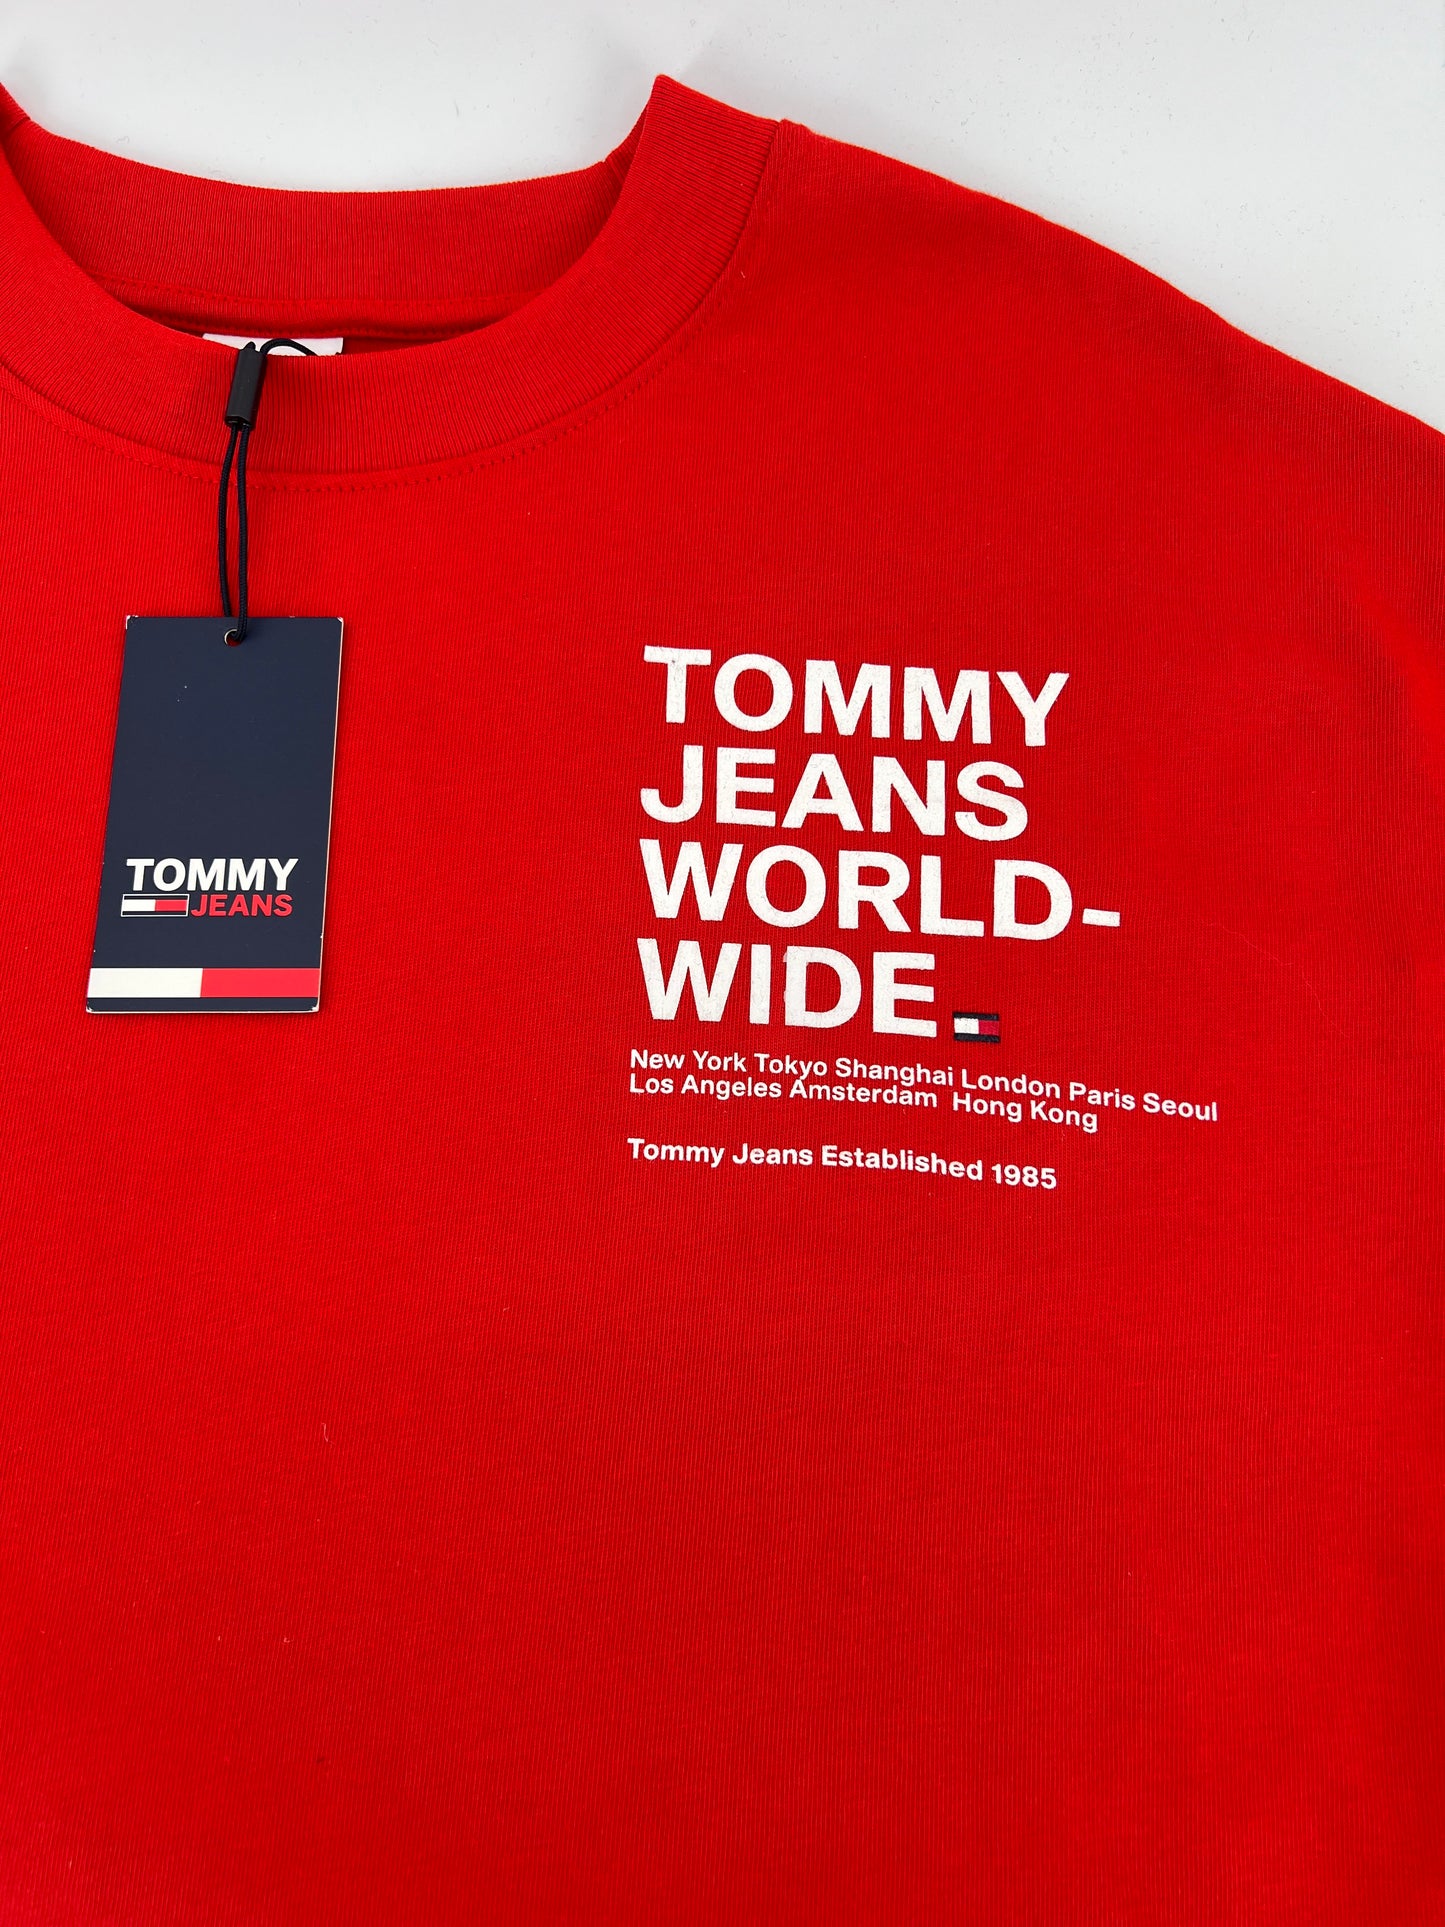 TOMMY HILFIGER JEANS - Tee shirt manche courte " World wide "